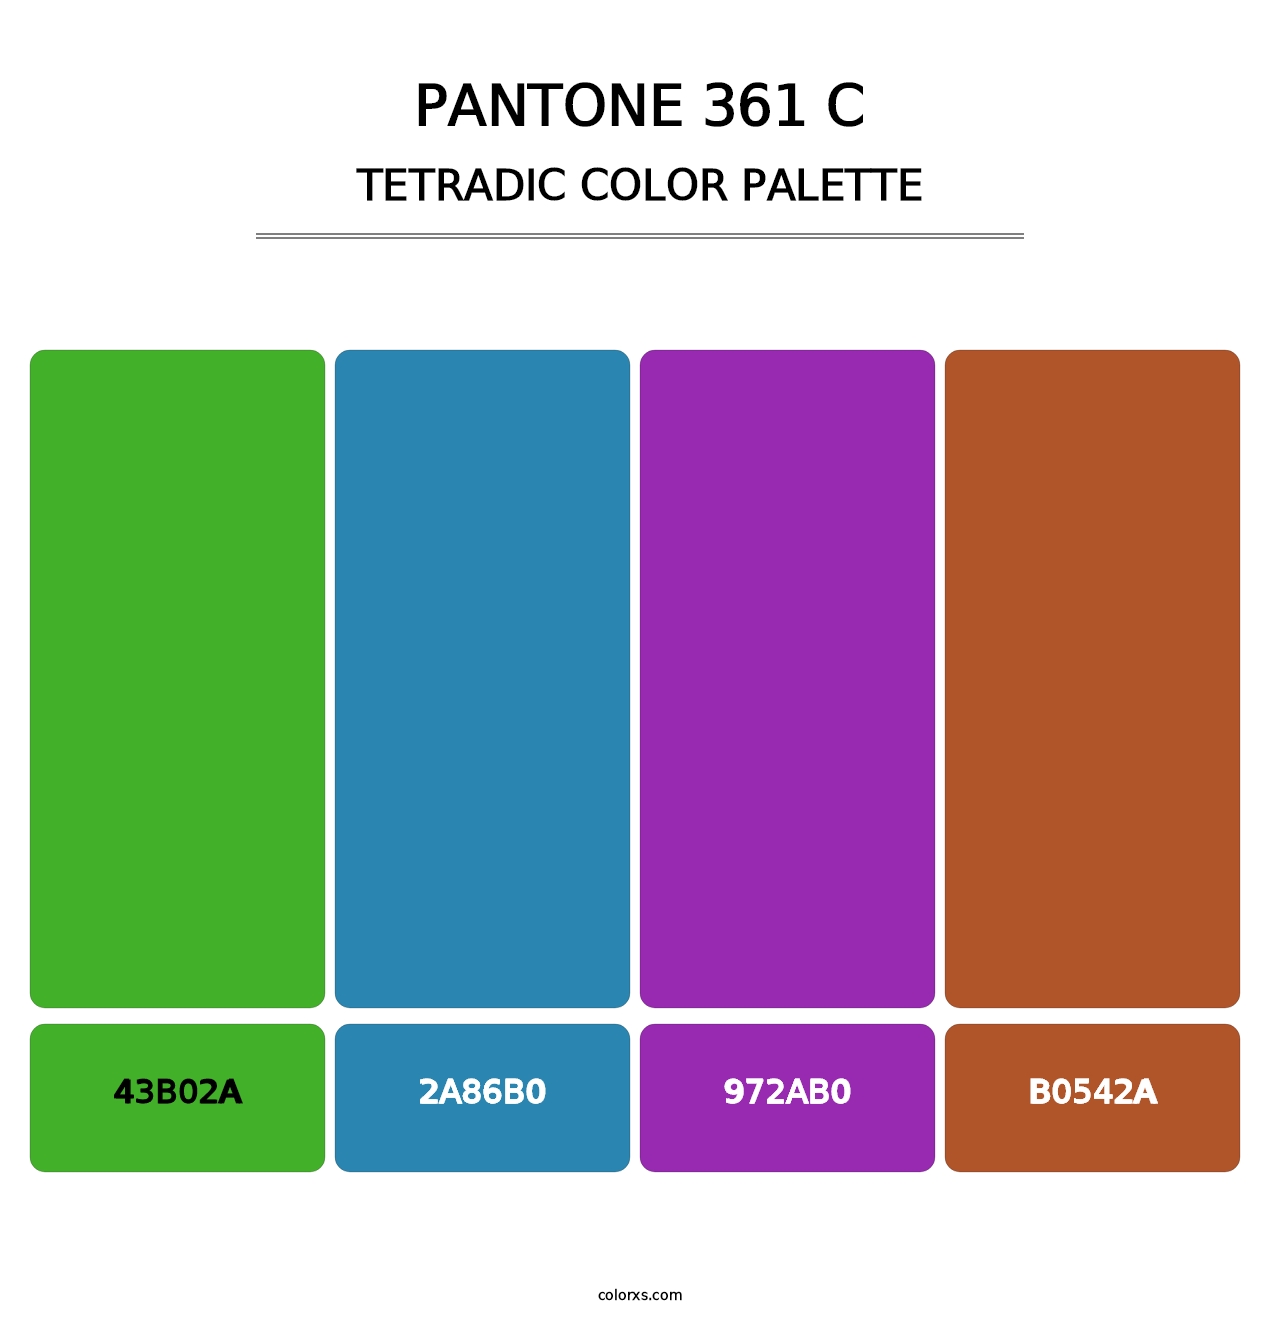 PANTONE 361 C - Tetradic Color Palette